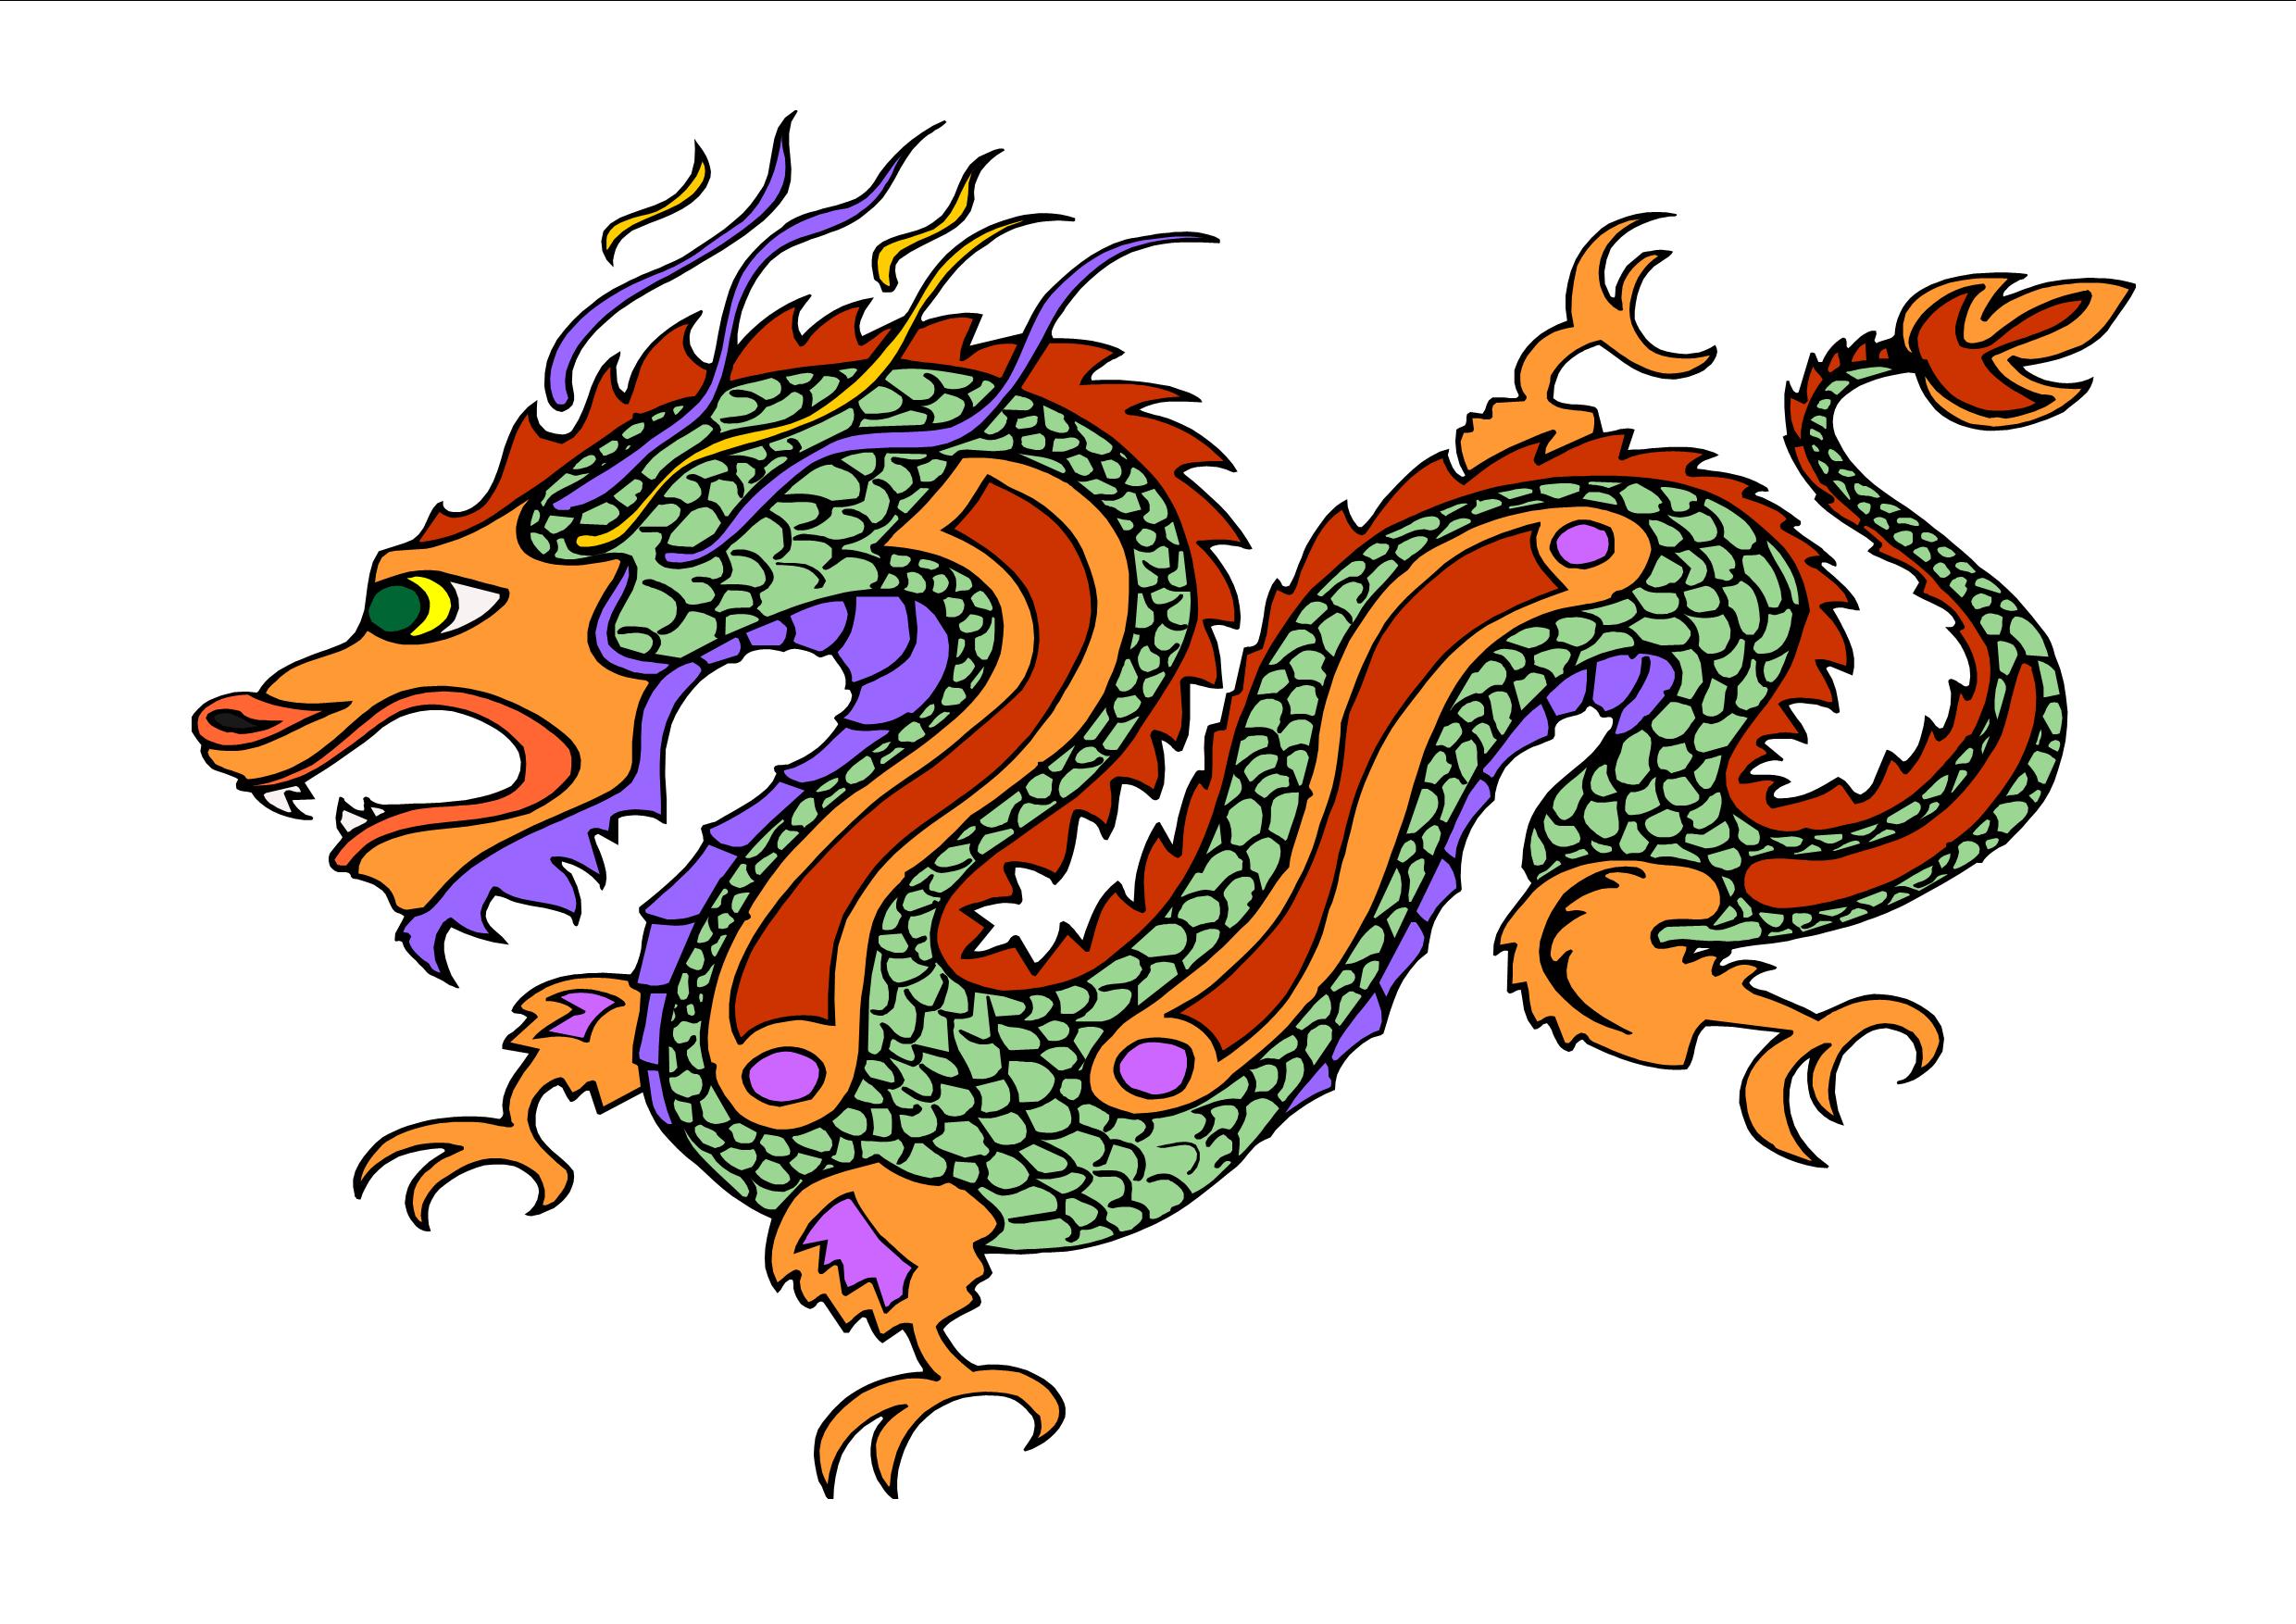 Chinese Dragon - Vertcal